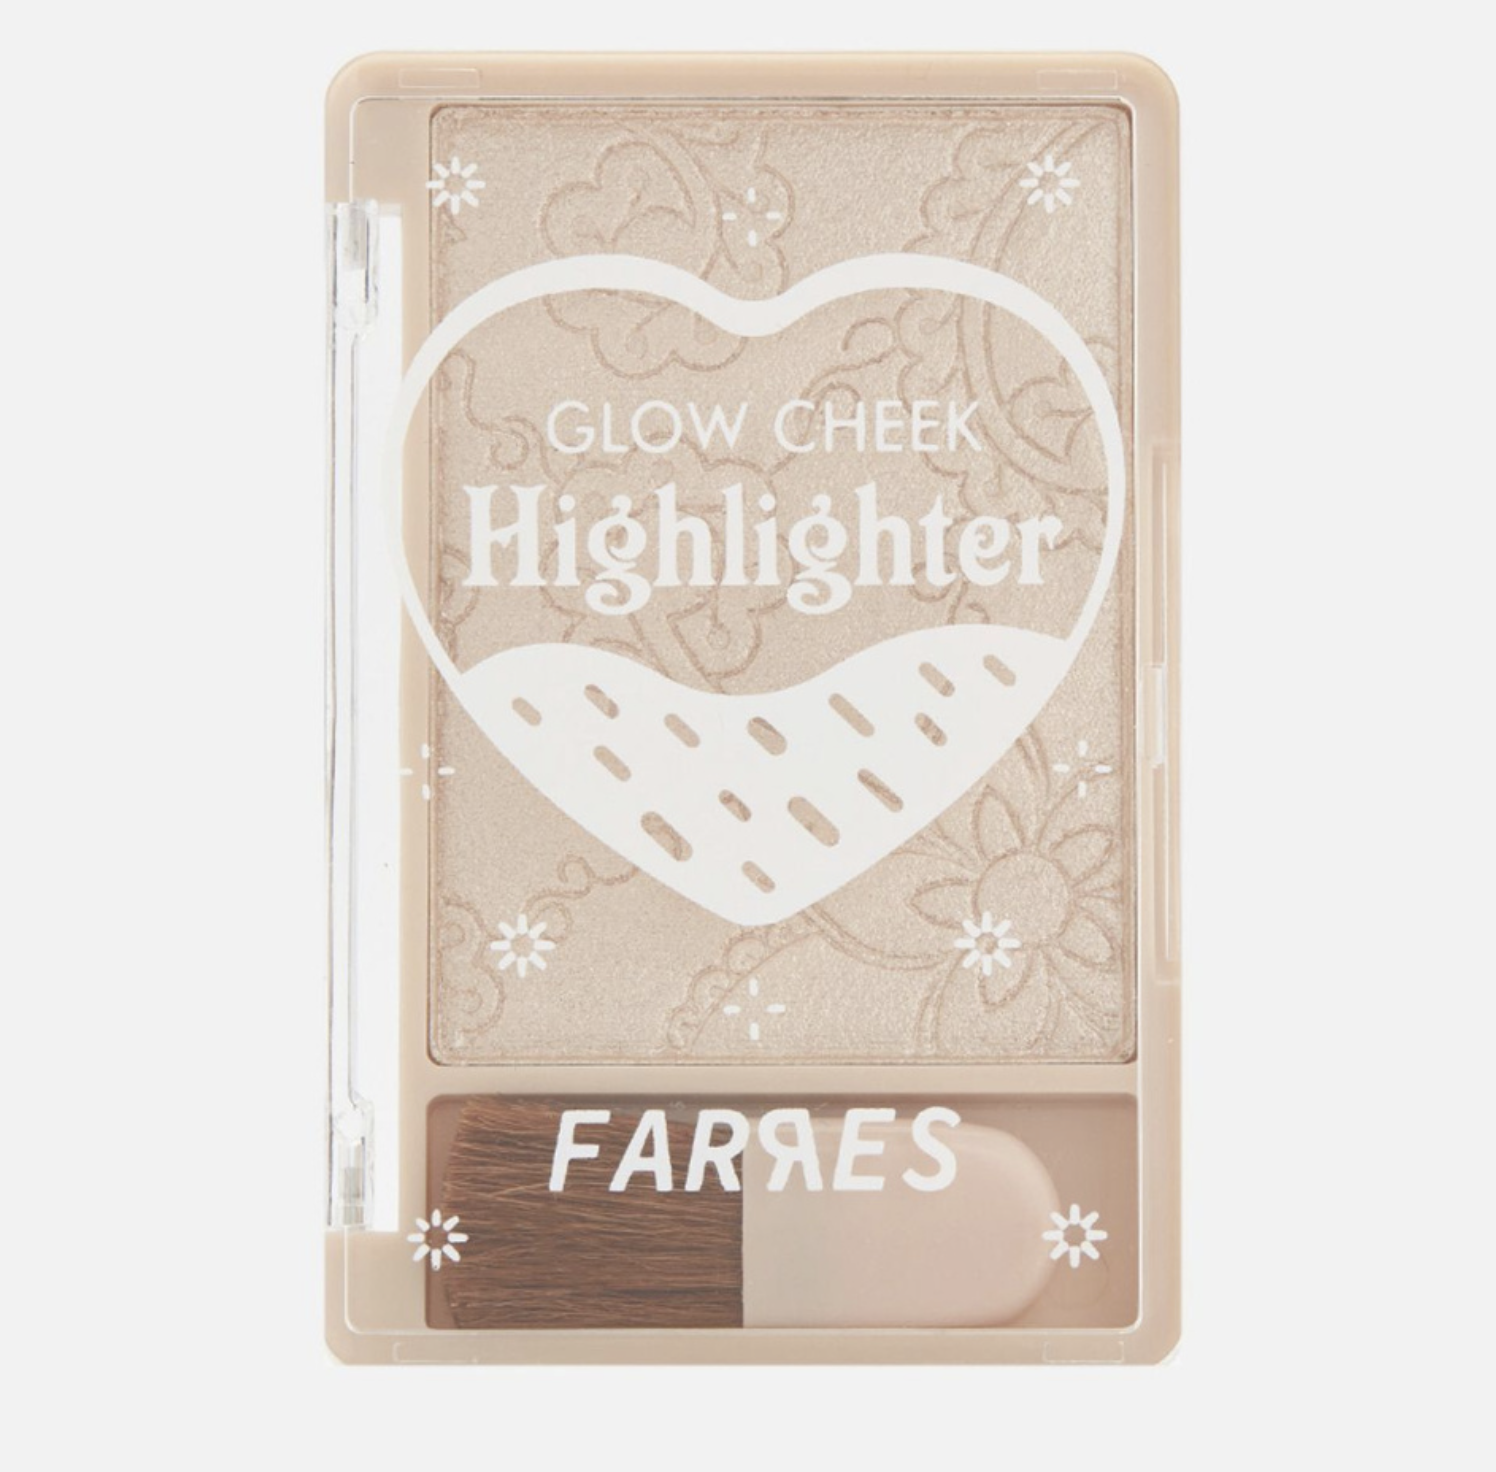 Хайлайтер для лица Farres Glow Cheek Highlighter 3205-02, 9,6 г хайлайтер pastel кремовый daylight cream highlighter 13